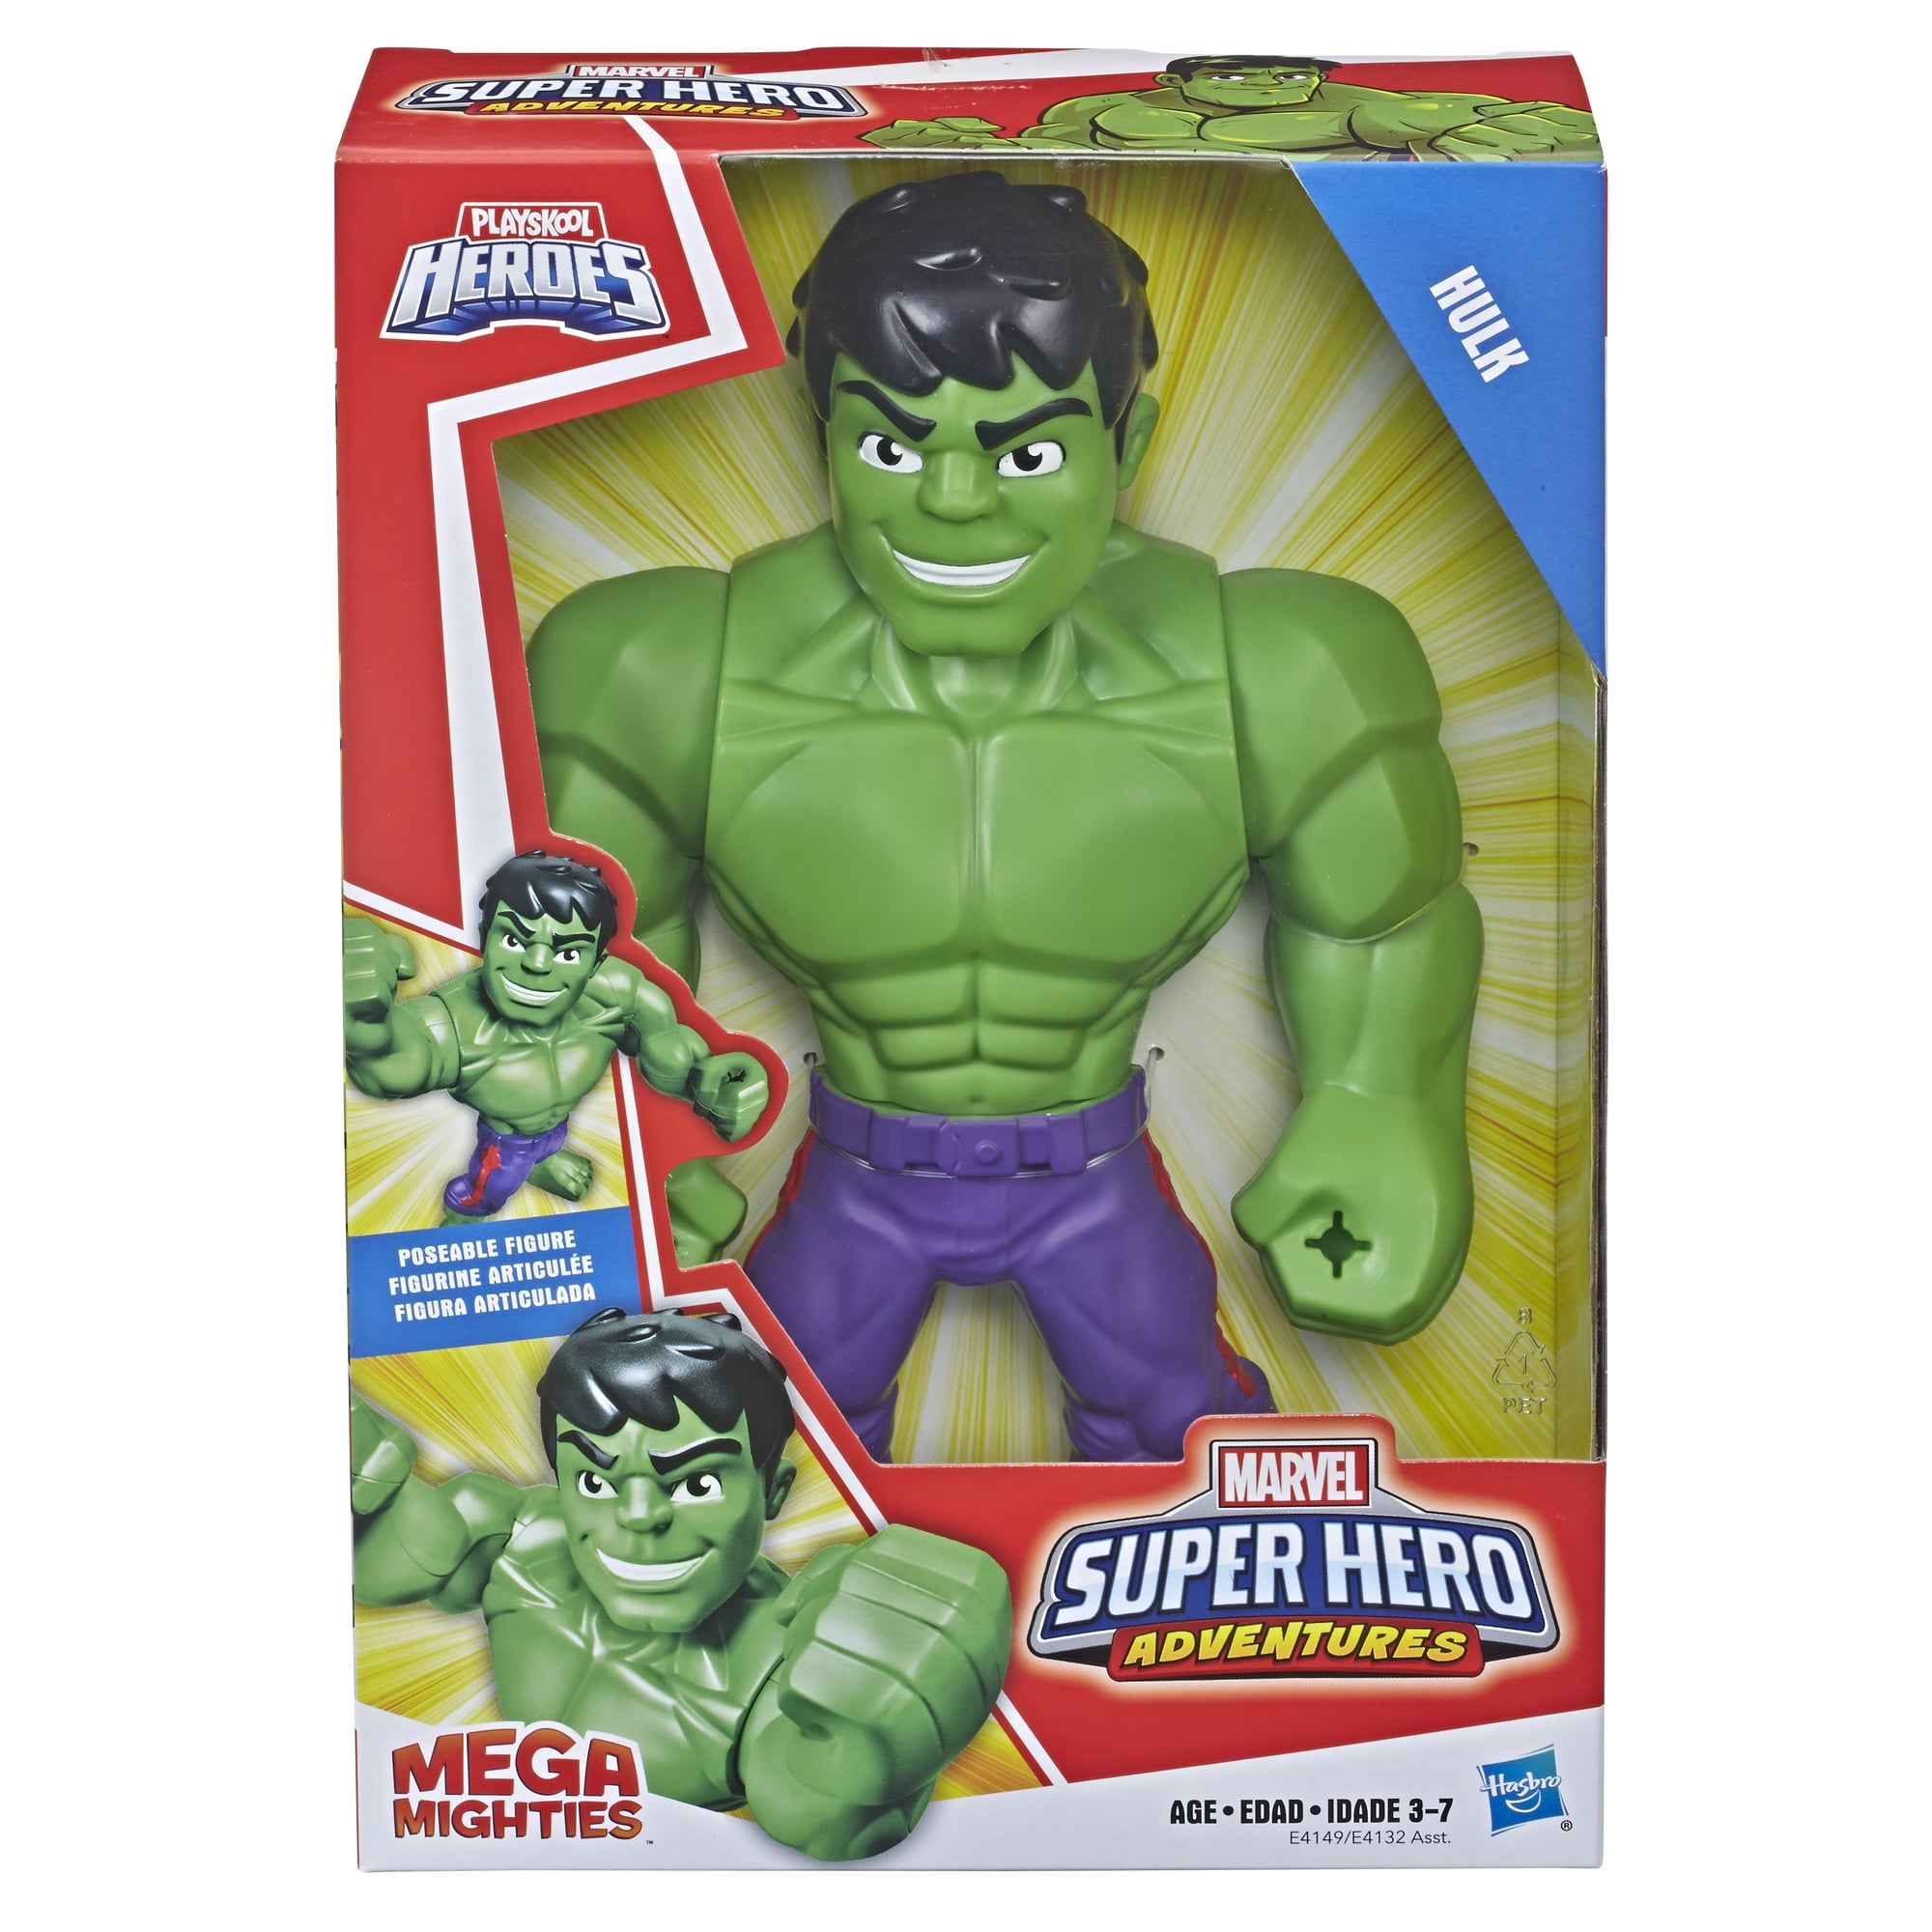 Marvel Super Hero Adventures Mega Mighties Hulk 9-Inch Action Figure New &Sealed 